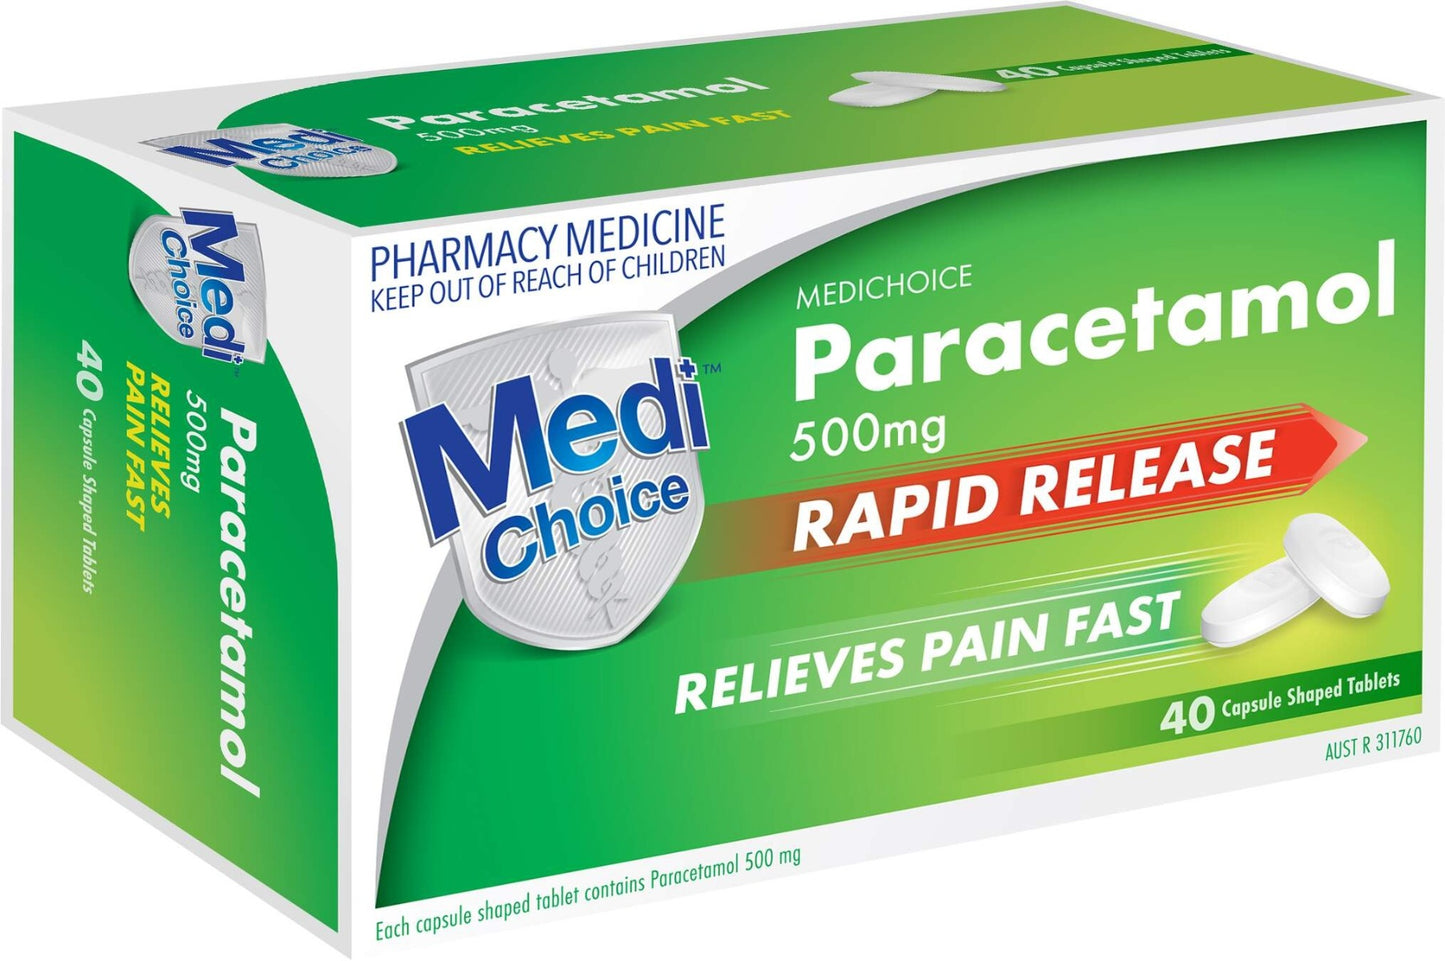 MediChoice Paracetamol Rapid Release Tablets 40